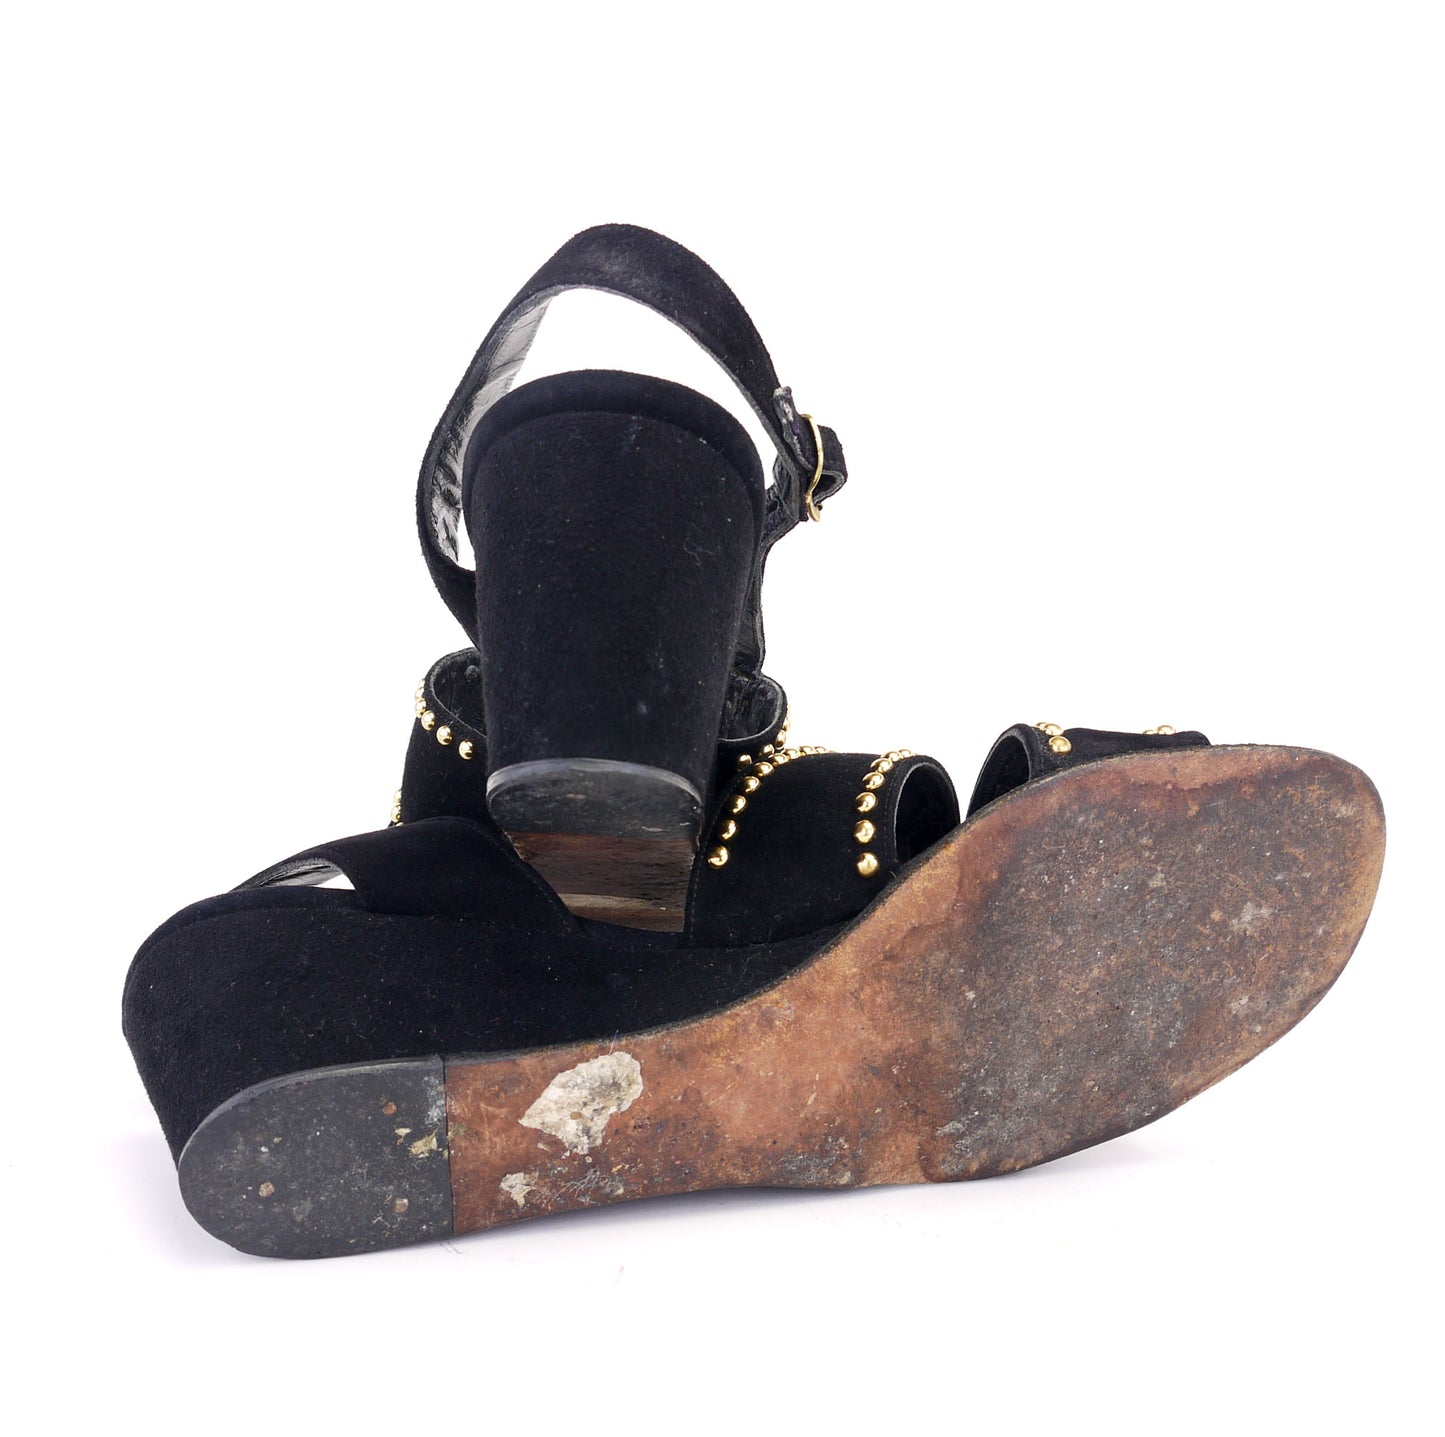 1950s Black Suede Studded Wedge Sandals UK 4.5